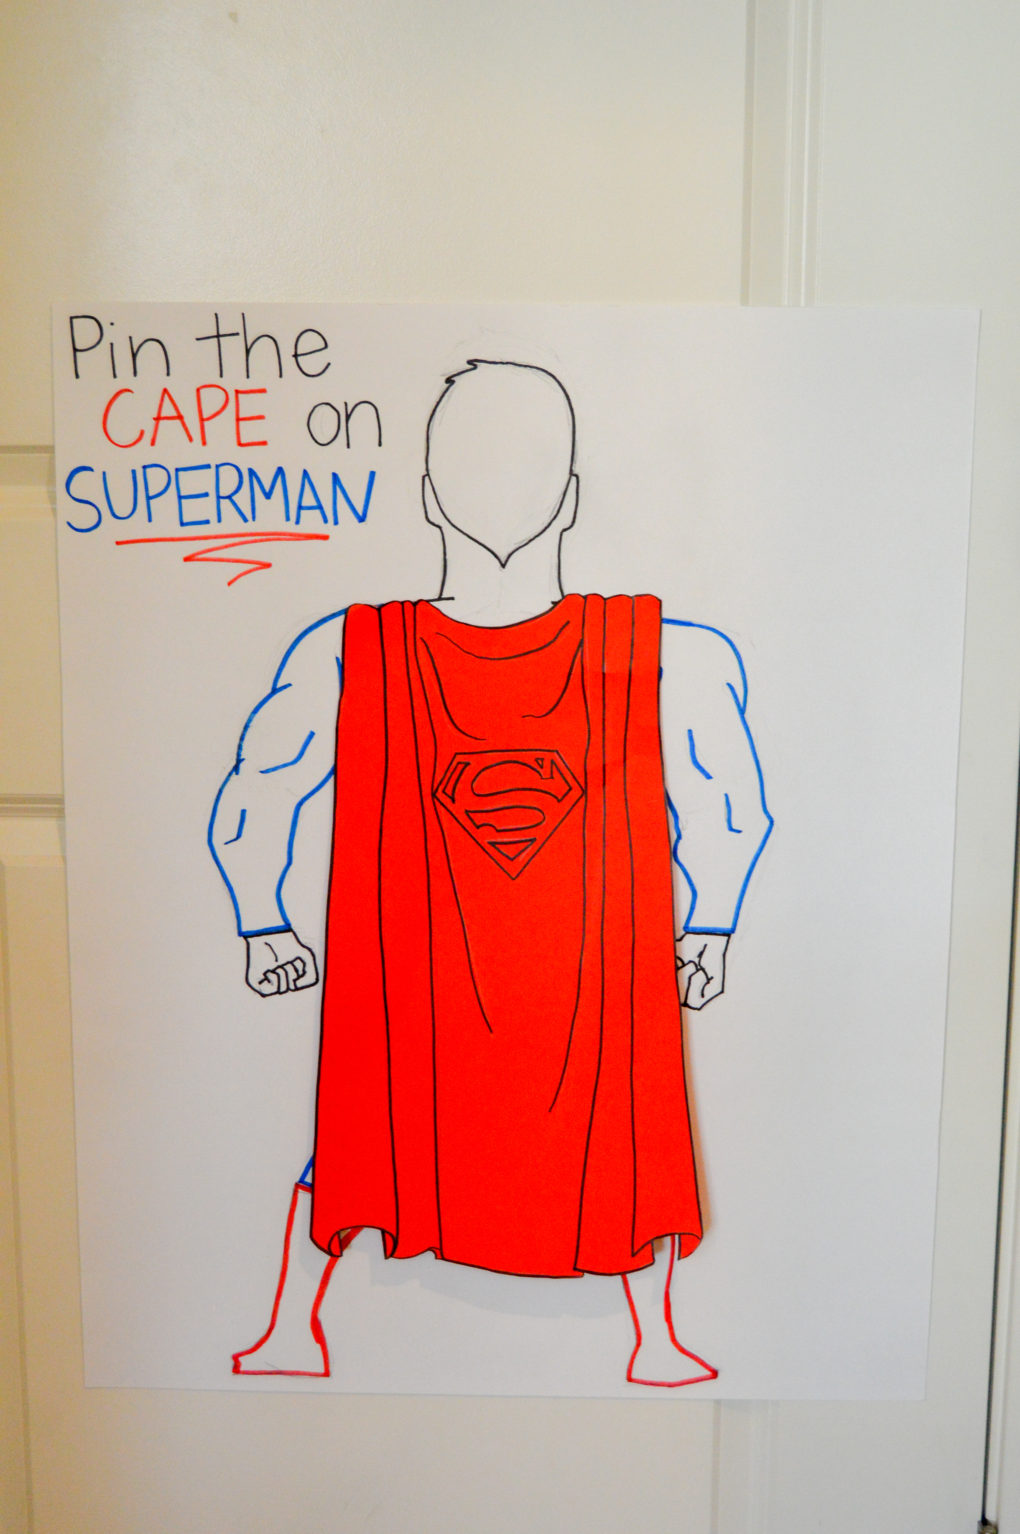 Superhero party activity - Pin the cape on superman